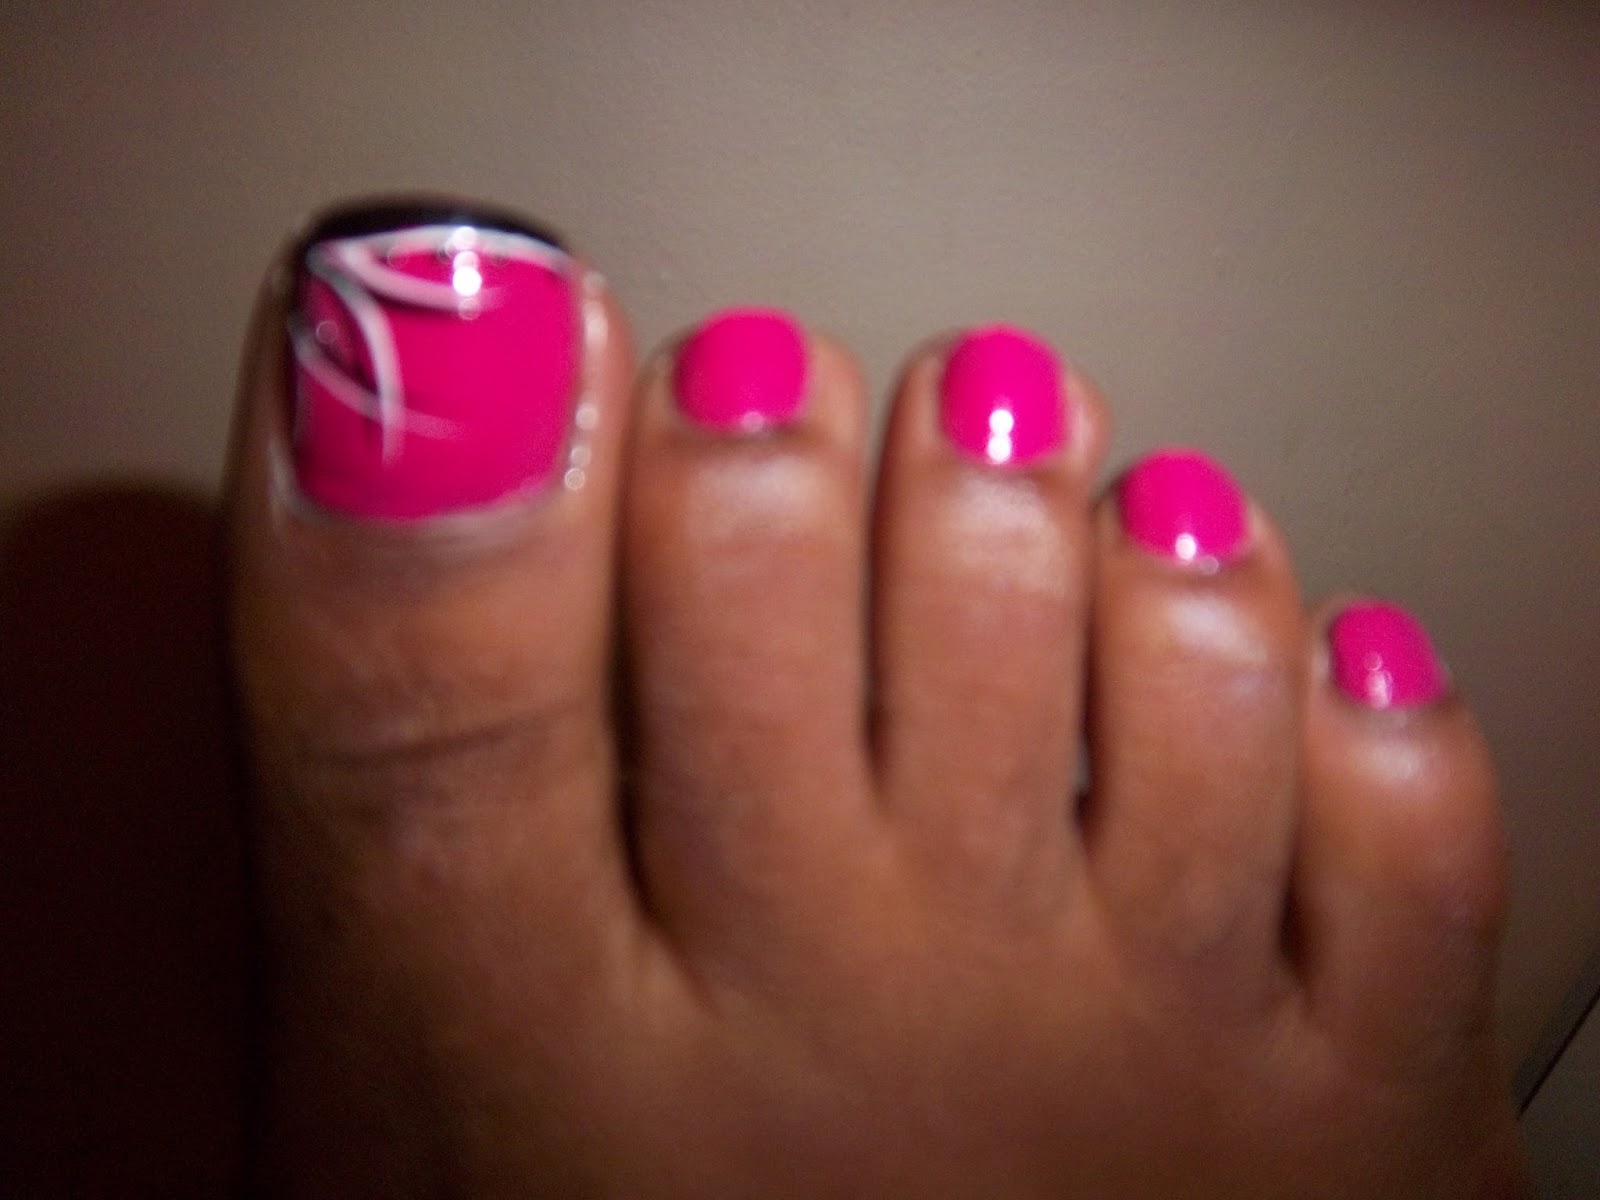 Pink Toe Nail Art Design